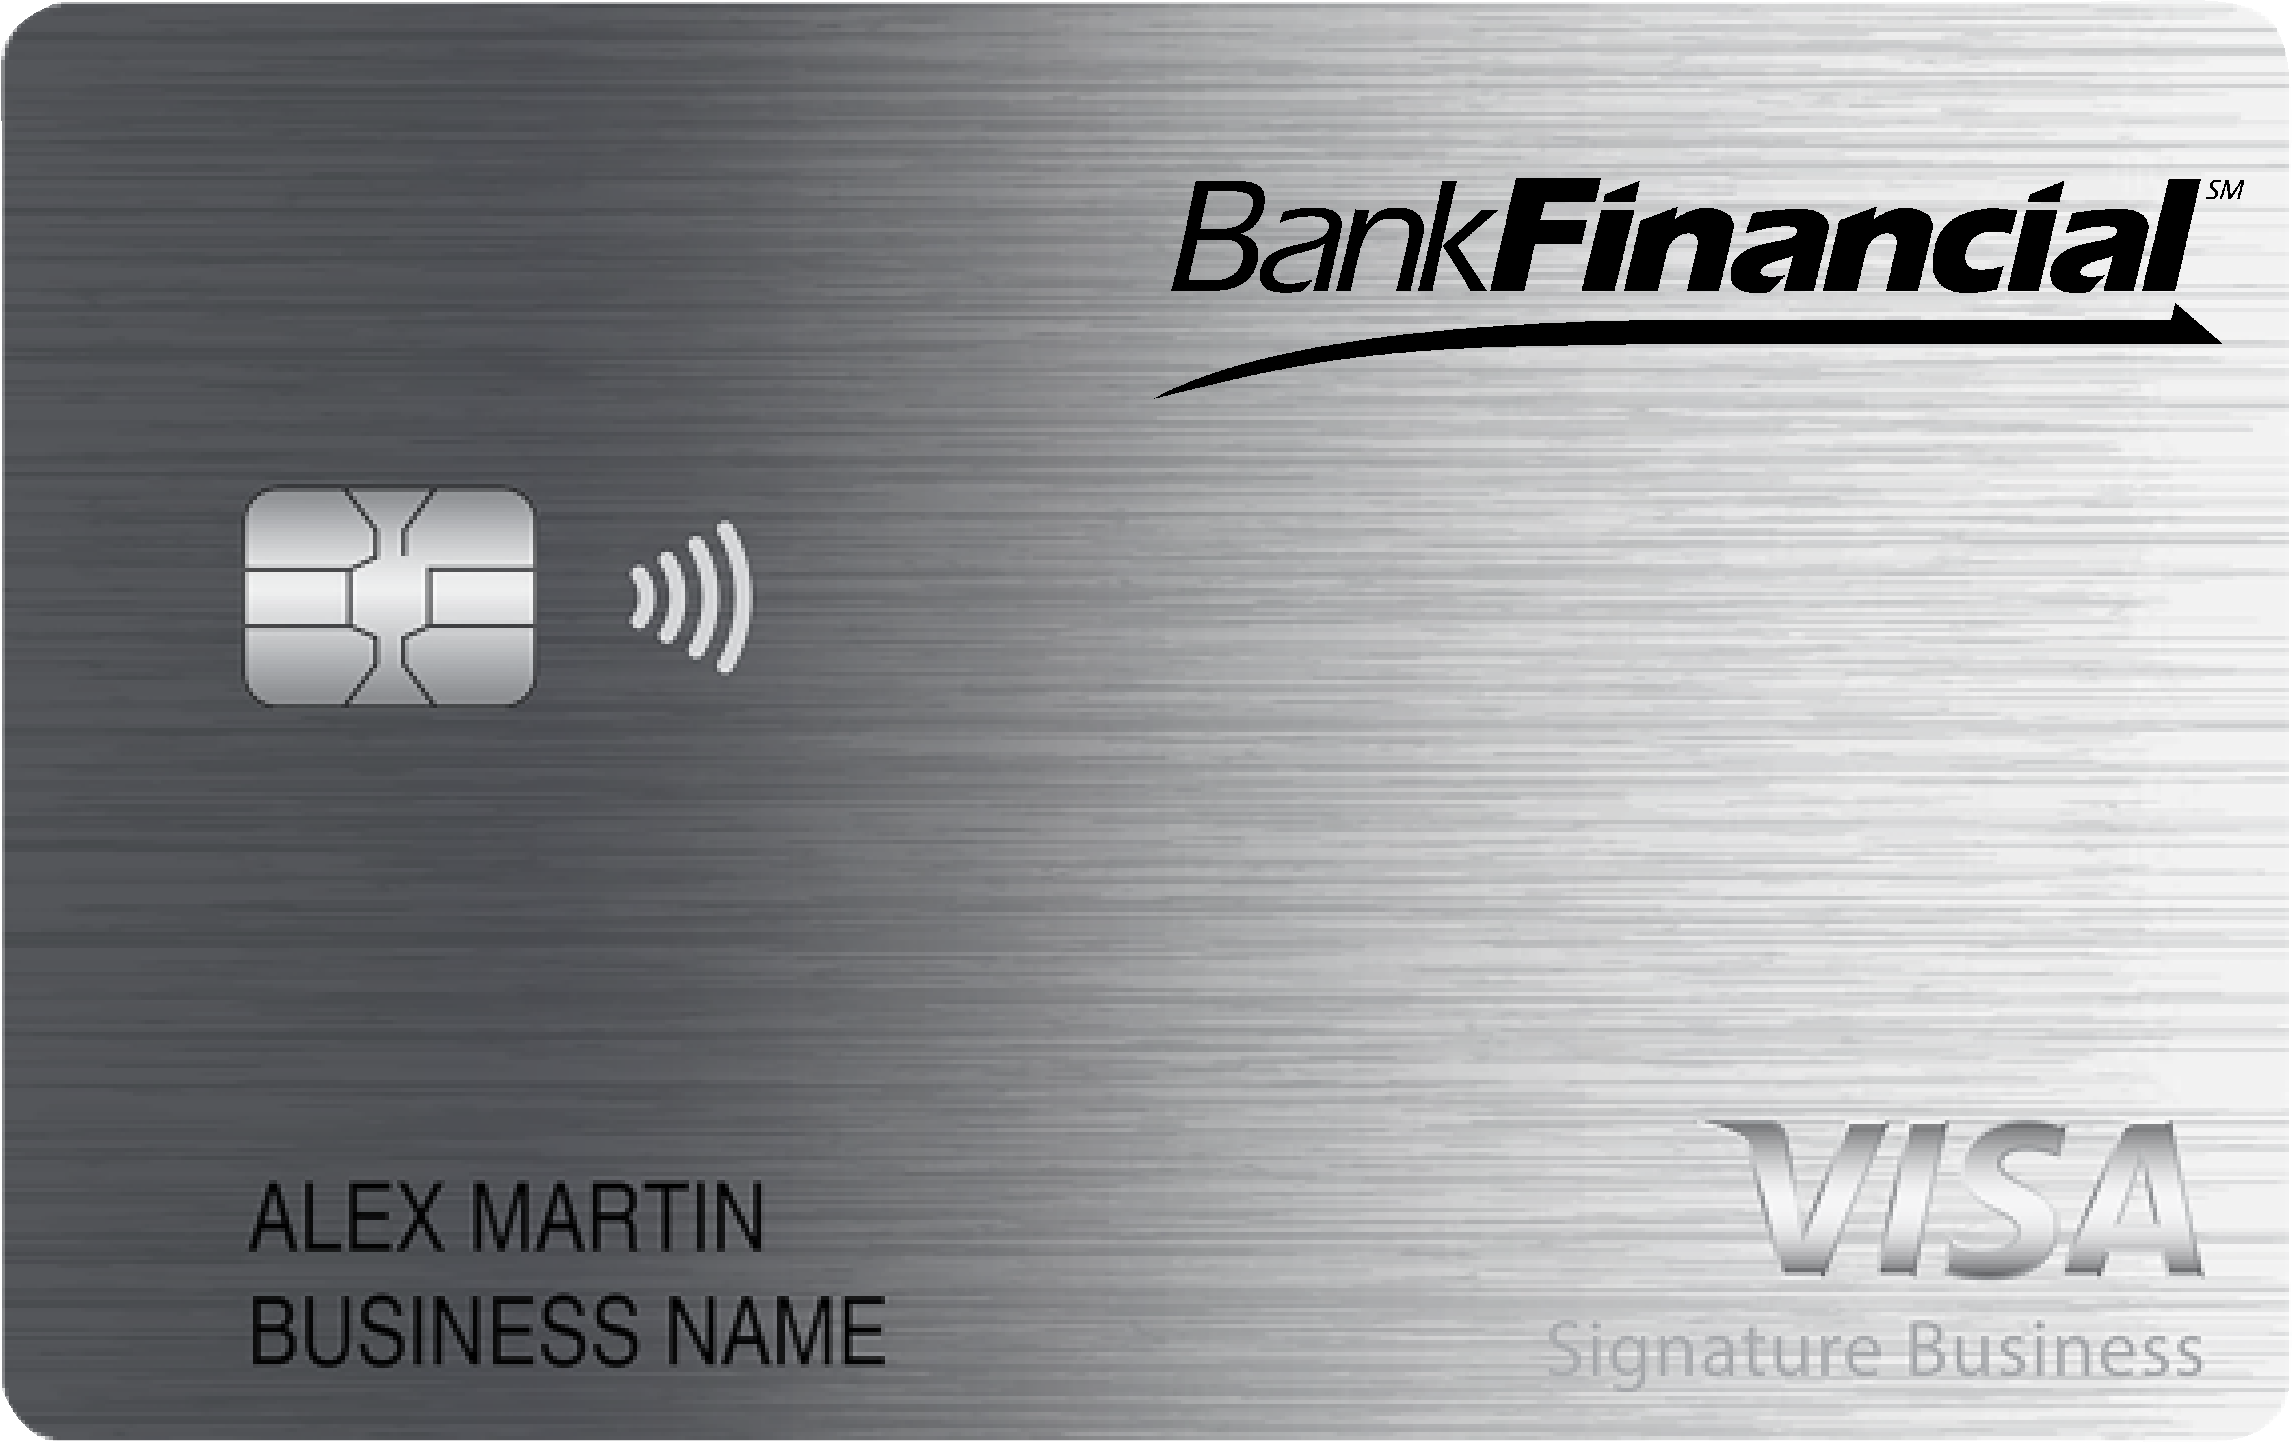 BankFinancial Smart Business Rewards Card